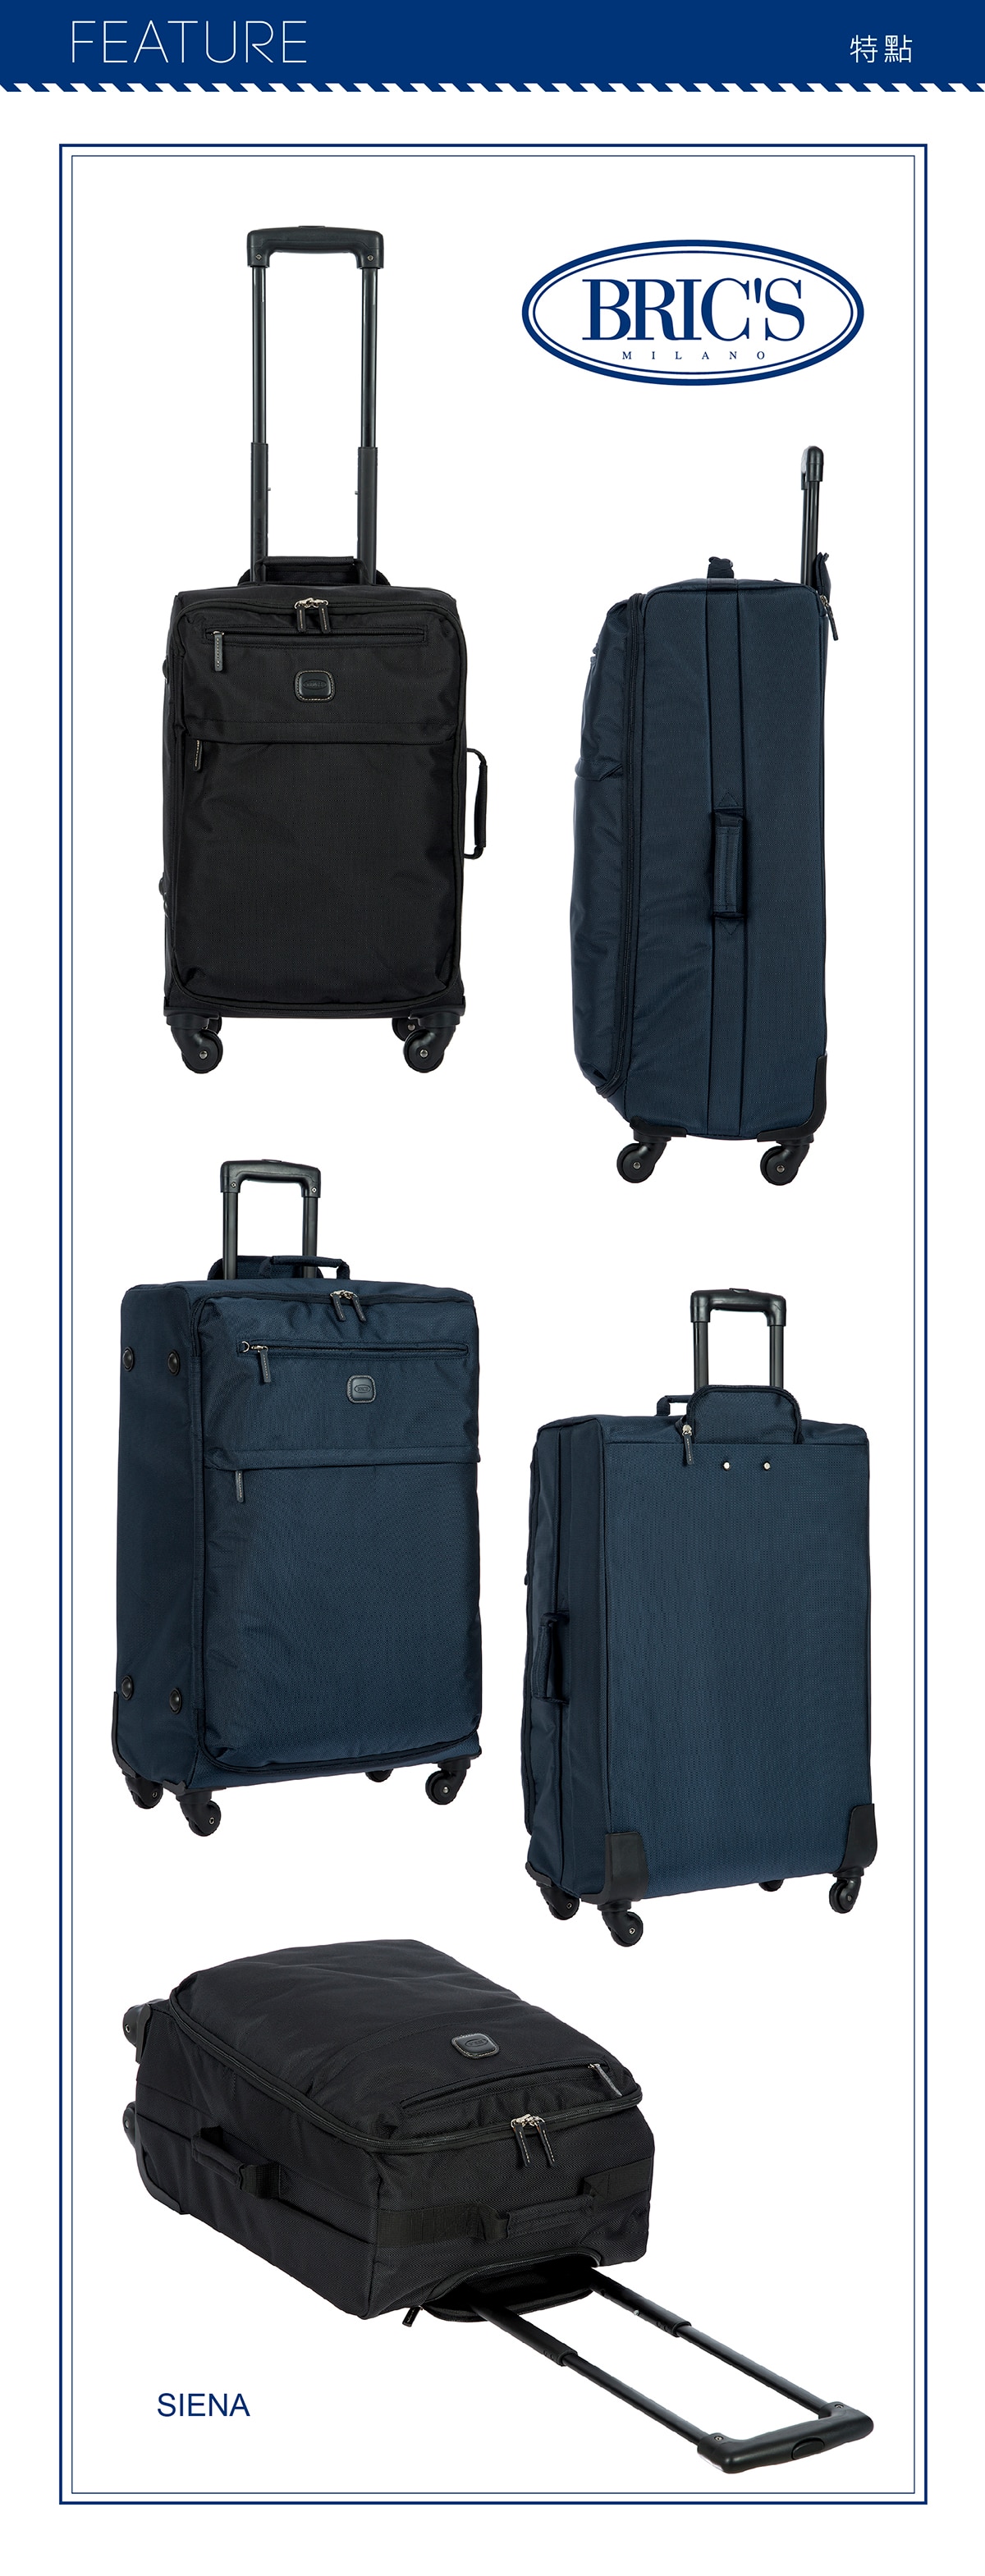 BRIC'S 28吋黑色行李箱,特殊加工尼龍布,Bric's的SIENA系列產品,是採用聚醯胺尼龍材質配上PVC襯底,既輕巧又防水,耐用又好清潔.